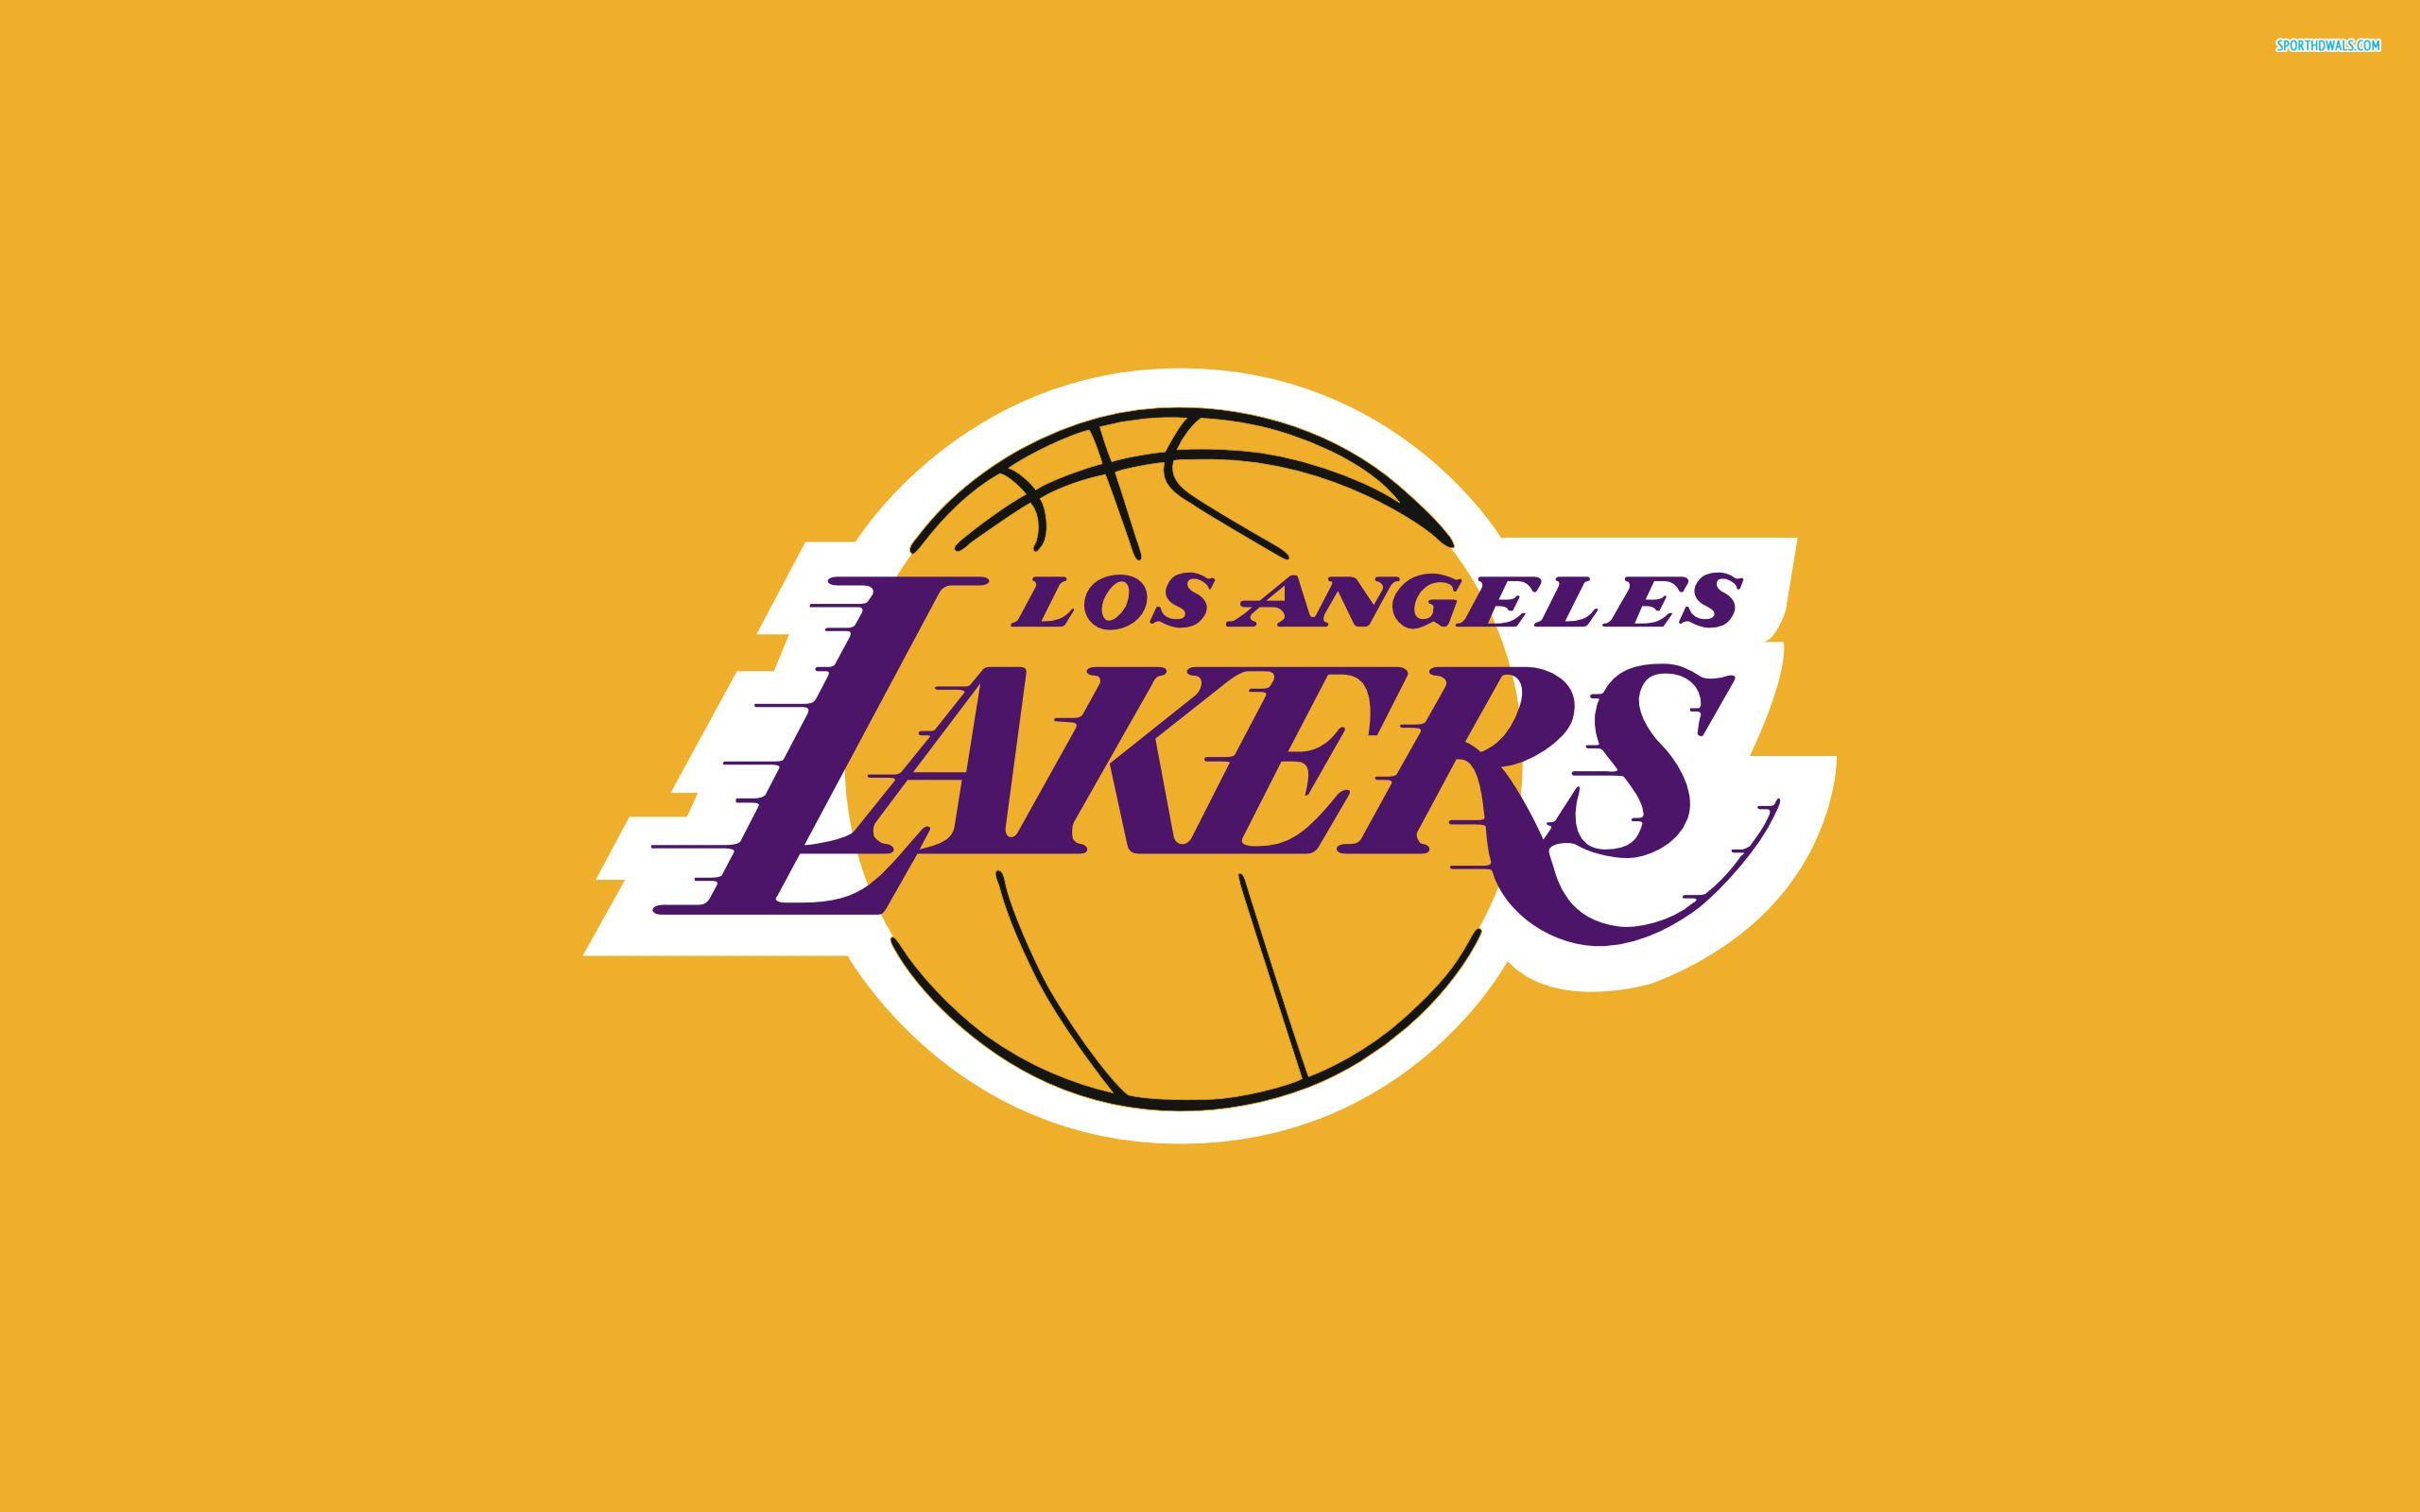 Los Angeles Lakers Wallpaper. Los Angeles Lakers wallpaper